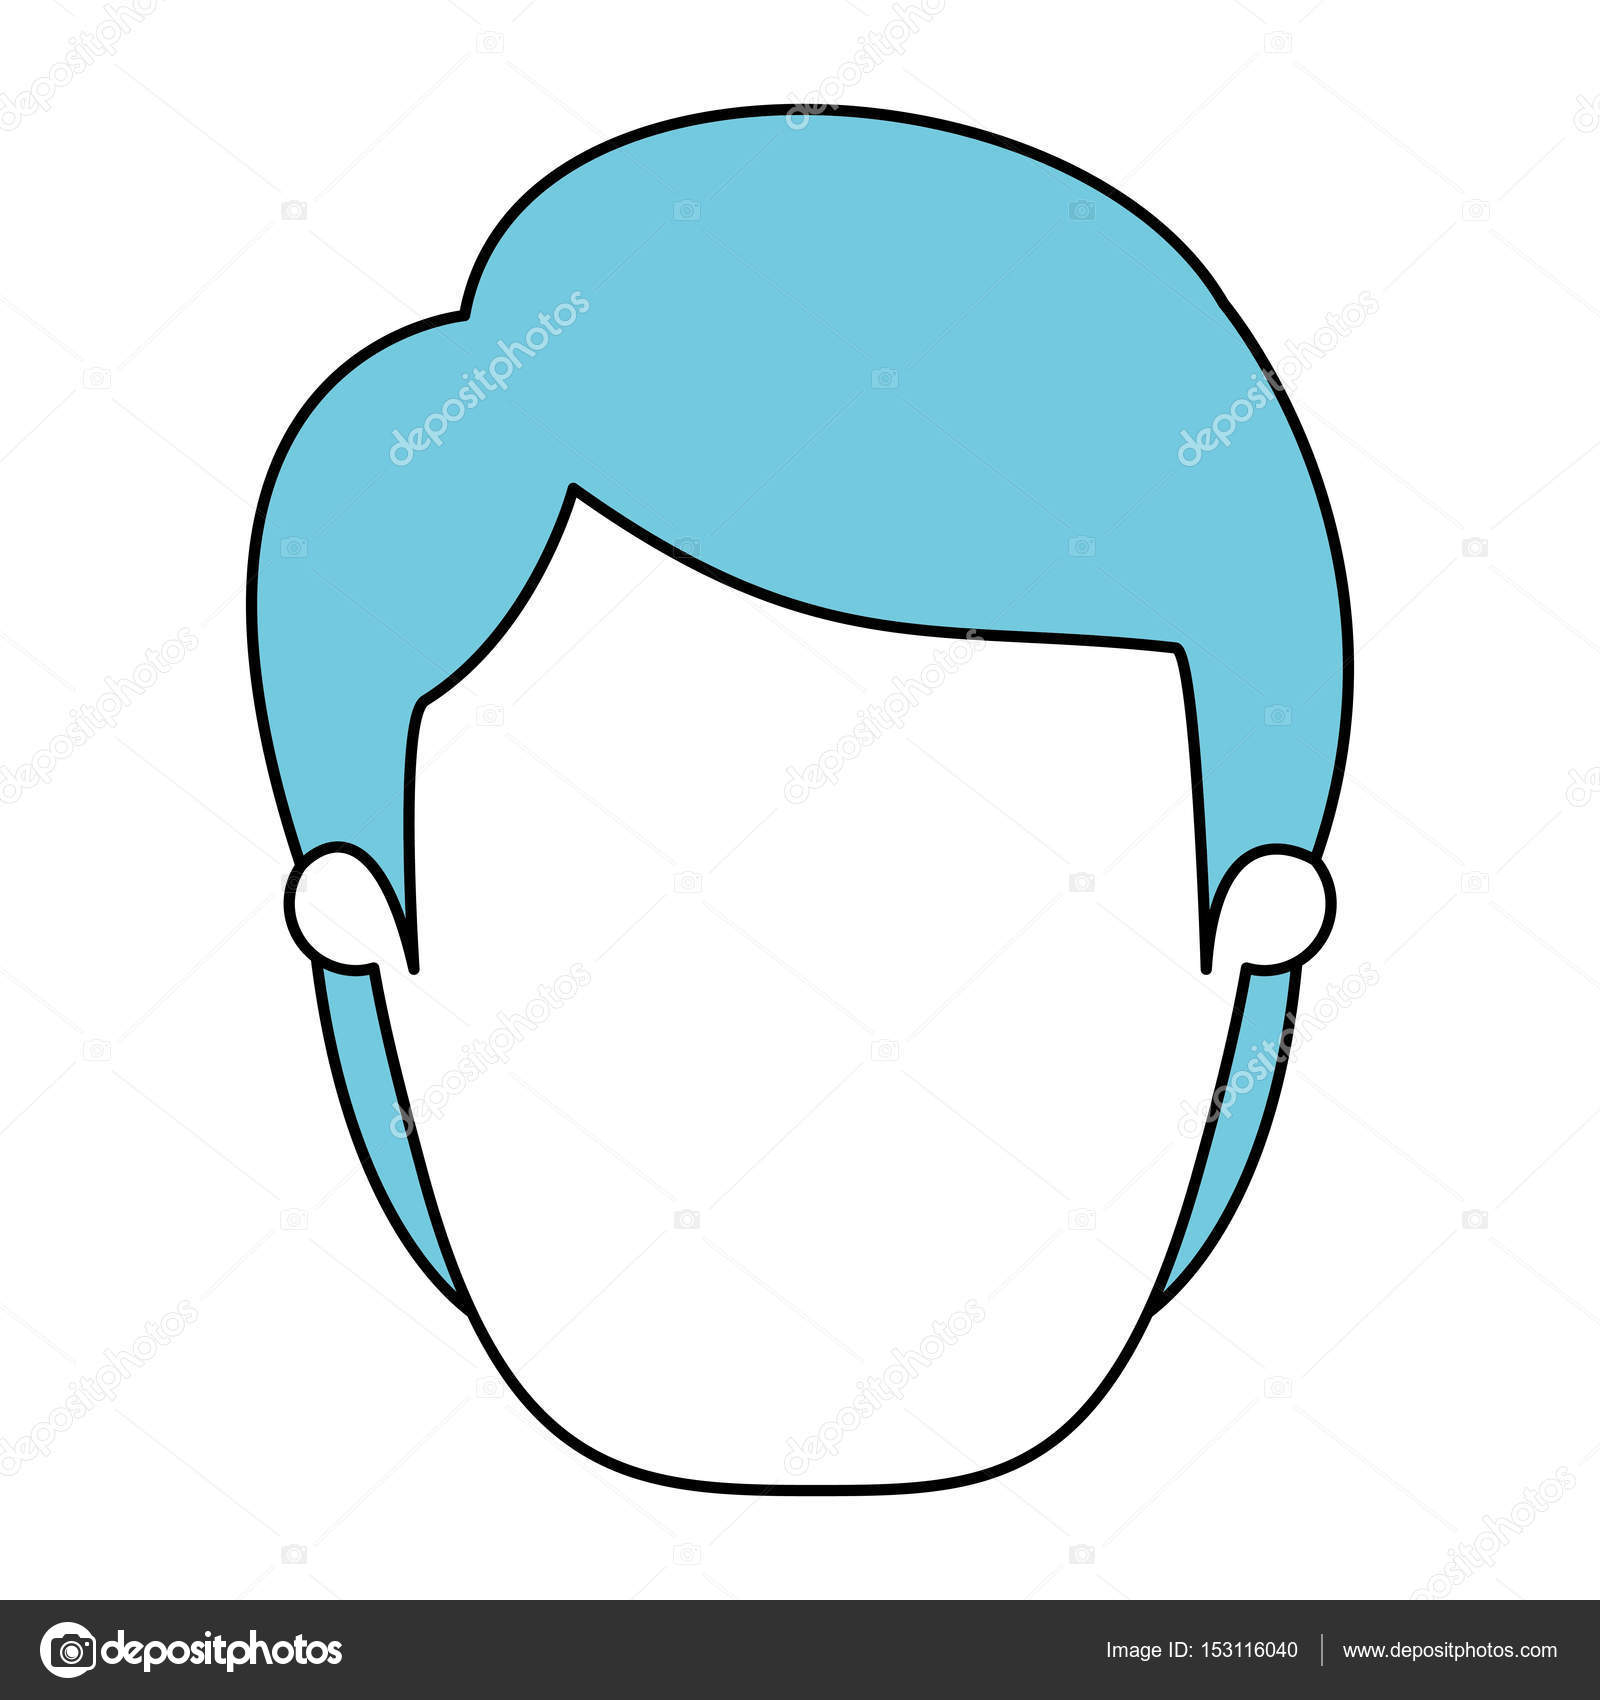 Silueta de dibujos animados vista frontal sin rostro hombre con peinado  azul vector, gráfico vectorial © grgroupstock imagen #153116040